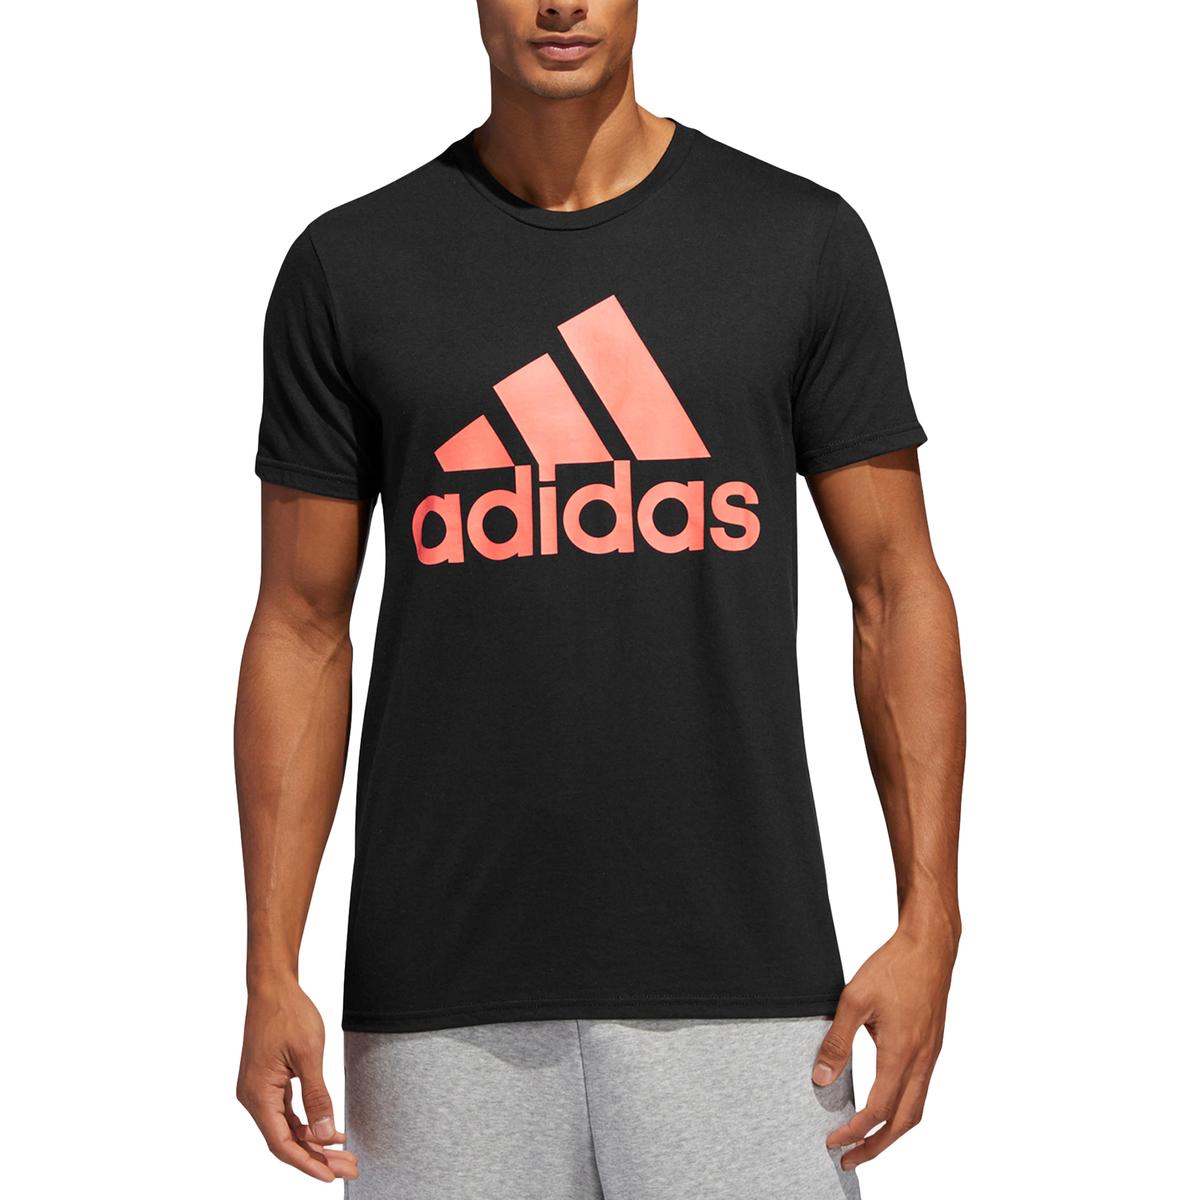 Adidas Mens Black Classic Performance Fitness T-Shirt Athletic M BHFO ...